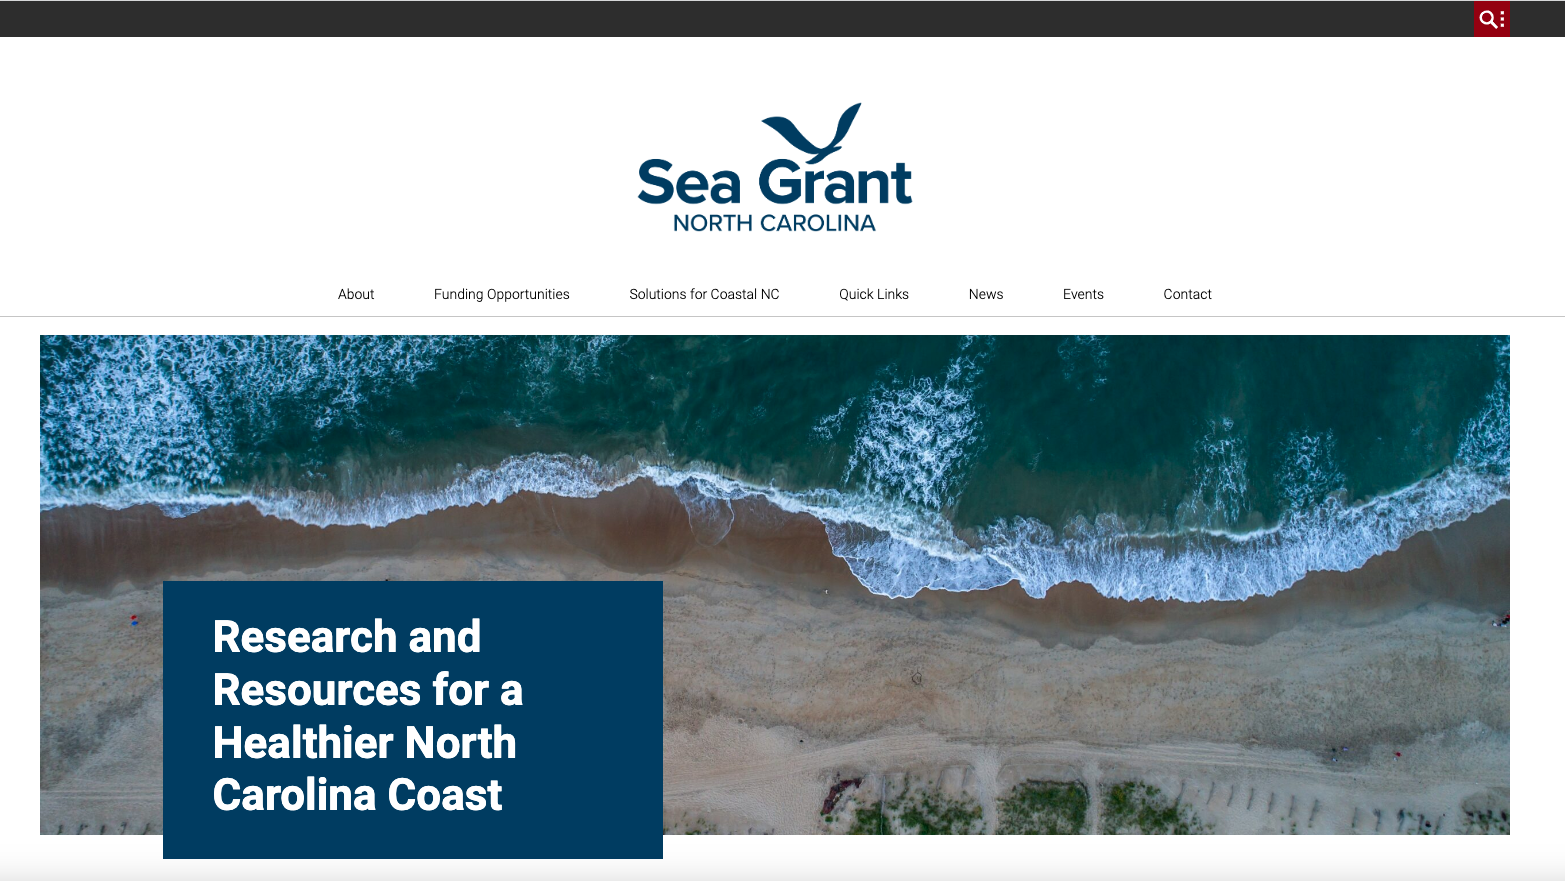 The homepage of the North Carolina Sea Grant website.